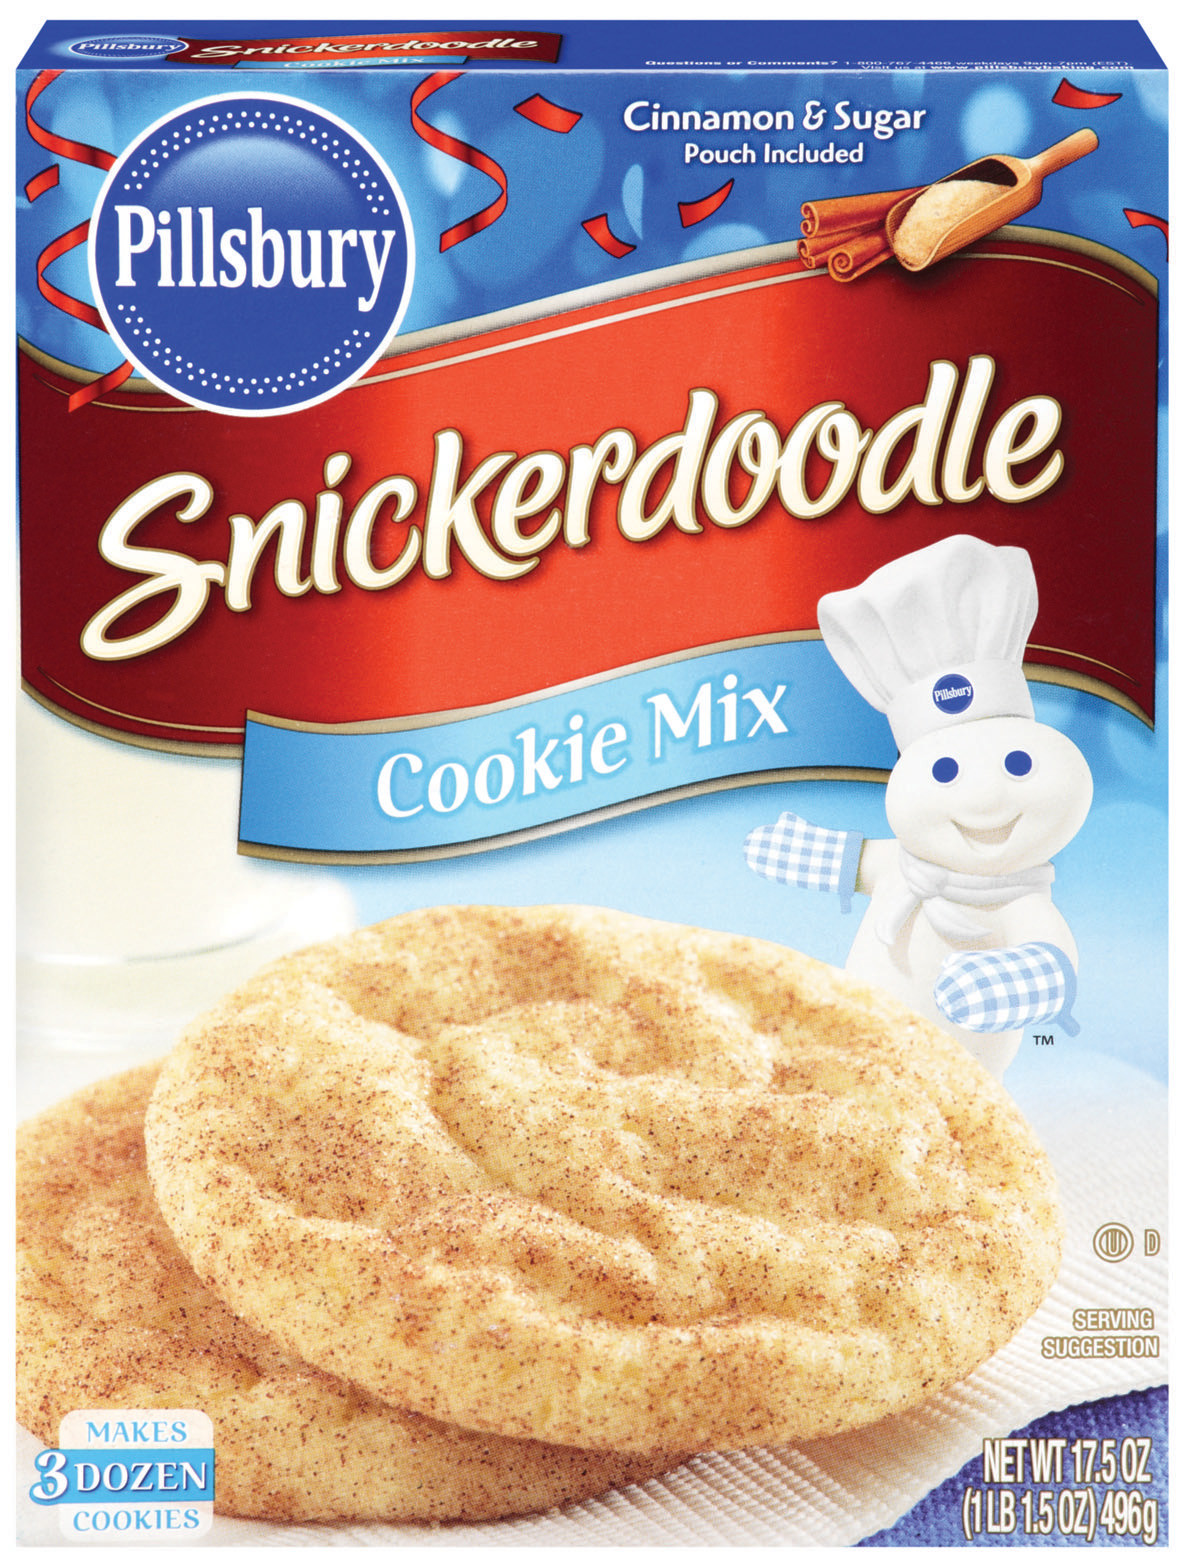 Pillsbury Halloween Cookies Walmart
 Pillsbury Cookie Mix $ 29 at Tar